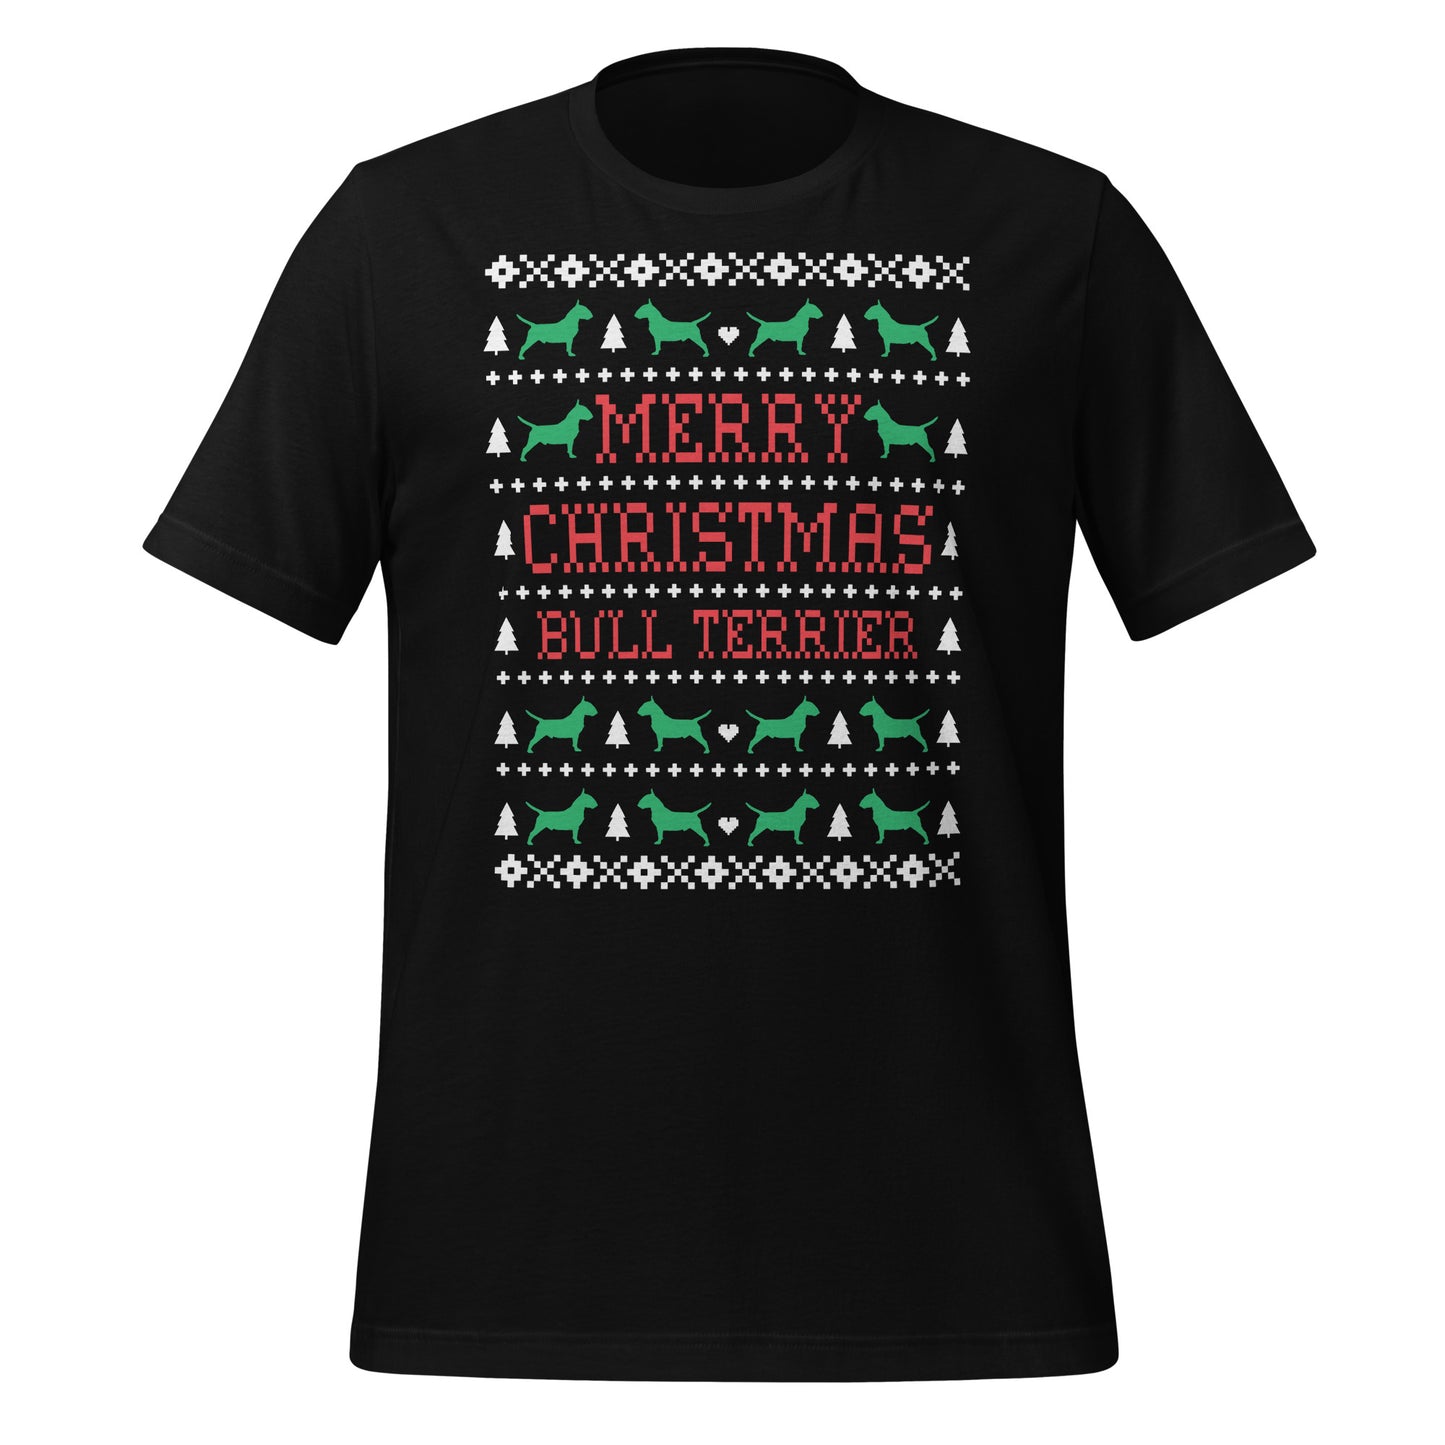 English Bull Terrier Ugly Christmas t-shirt black by Dog Artistry.